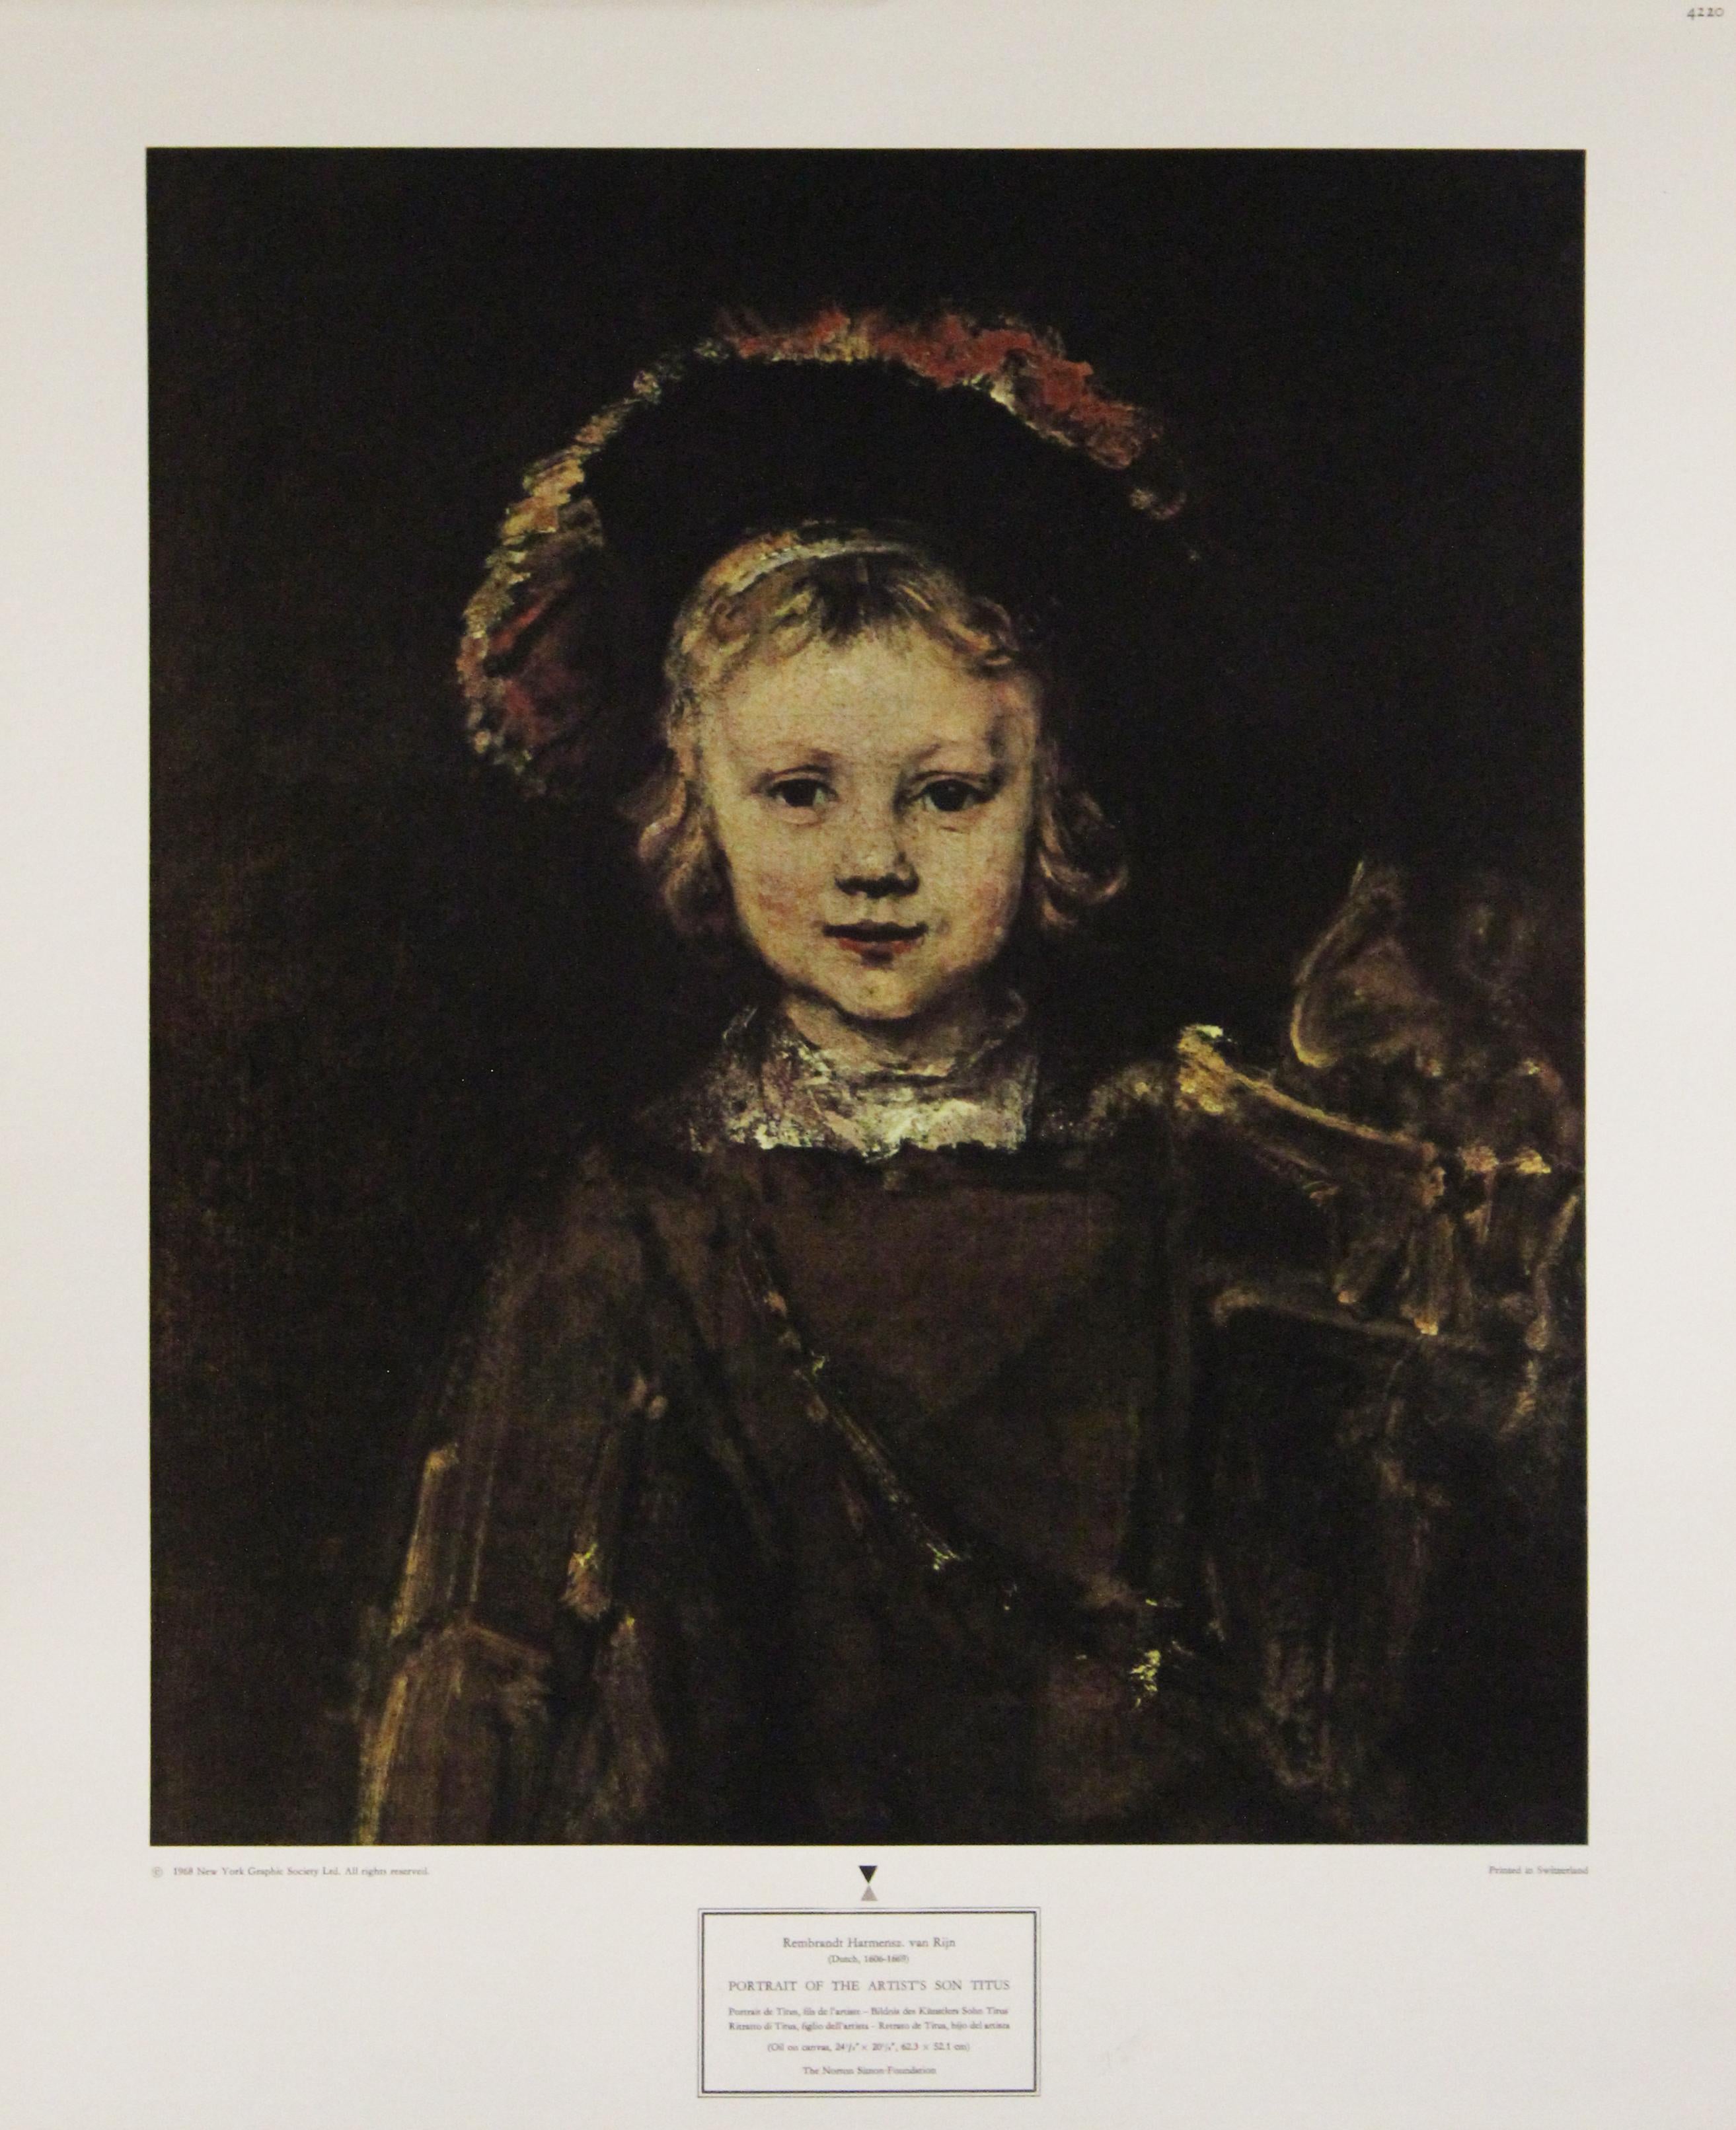 (After) Rembrandt van Rijn  Portrait Print - Portrait of the Artist's Son Titus-Poster. New York Graphic Society, Ltd. 